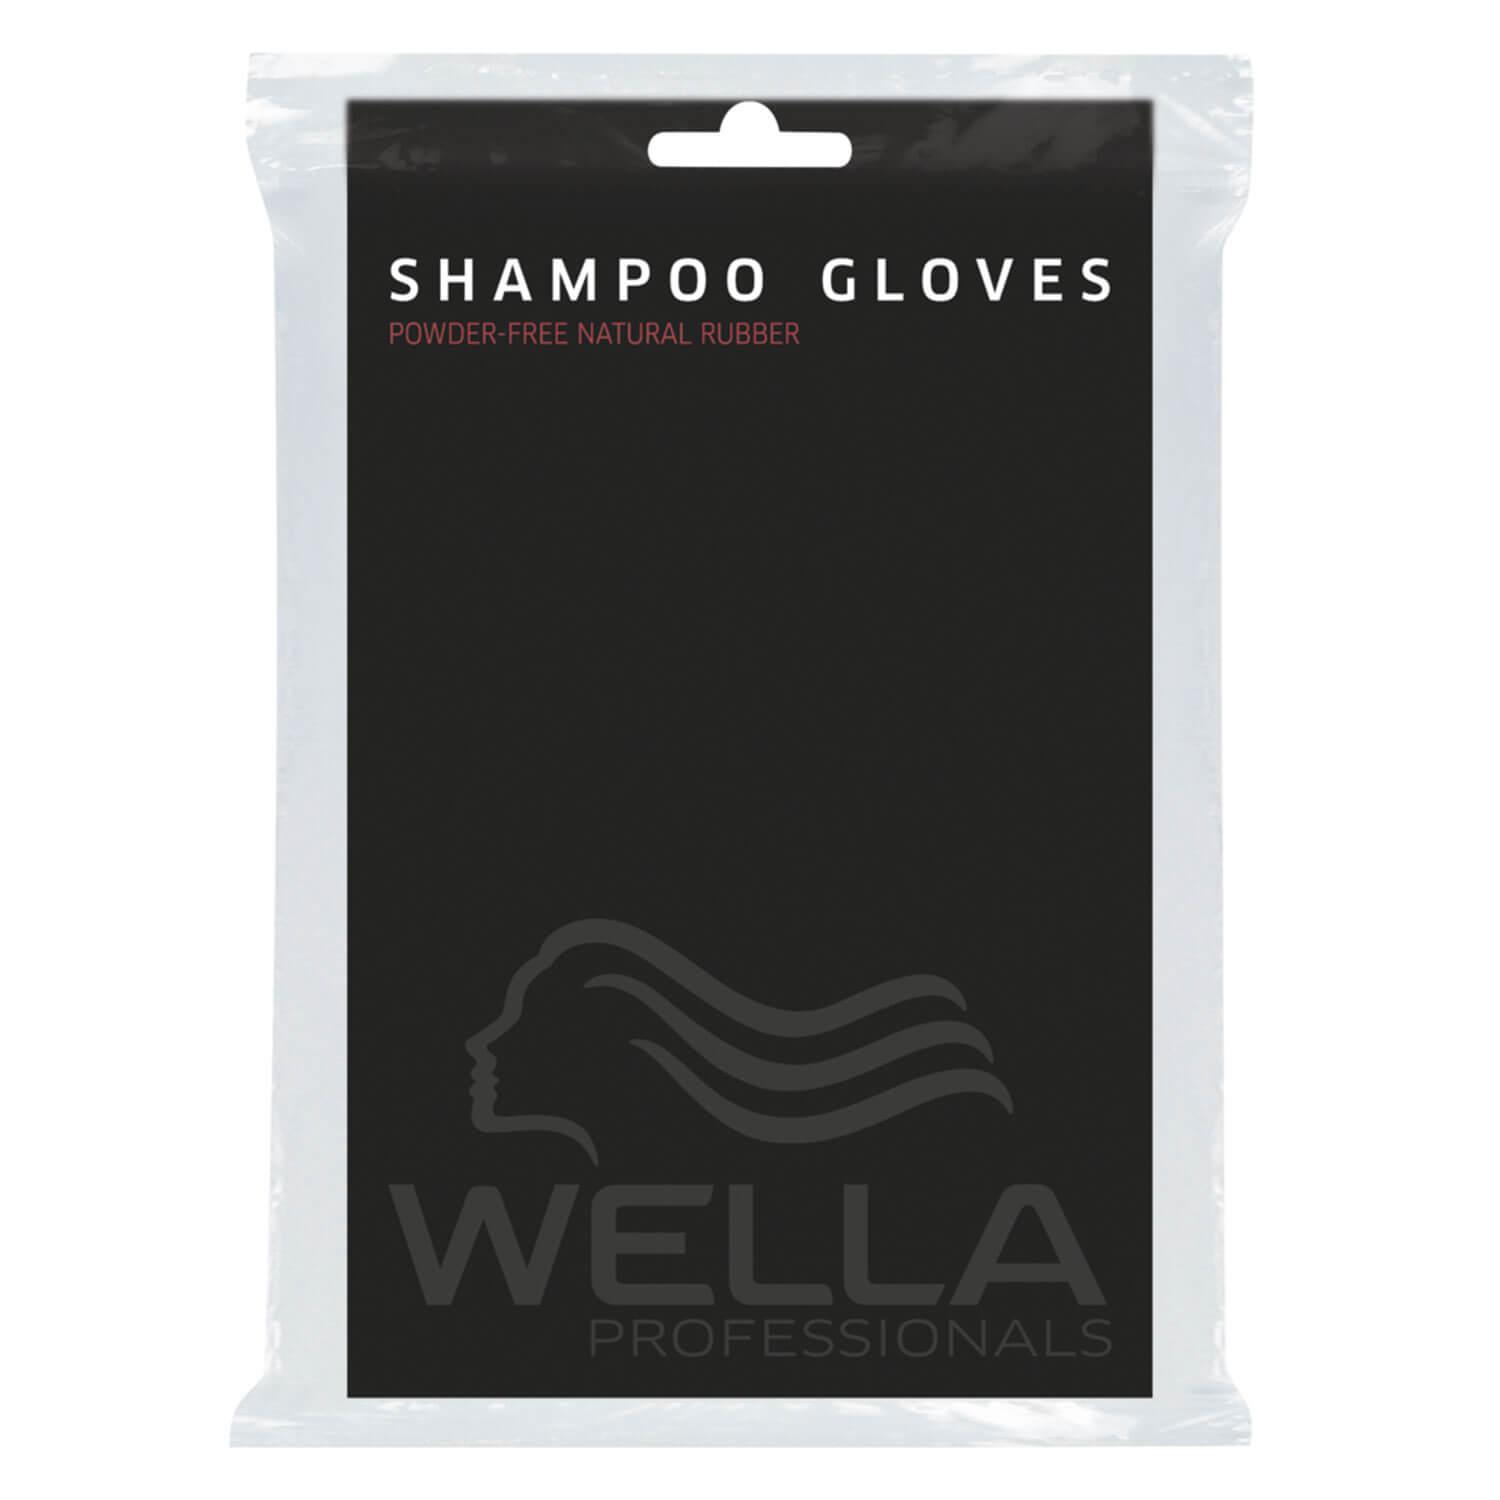 Wella Tools - Reusable Washing Gloves